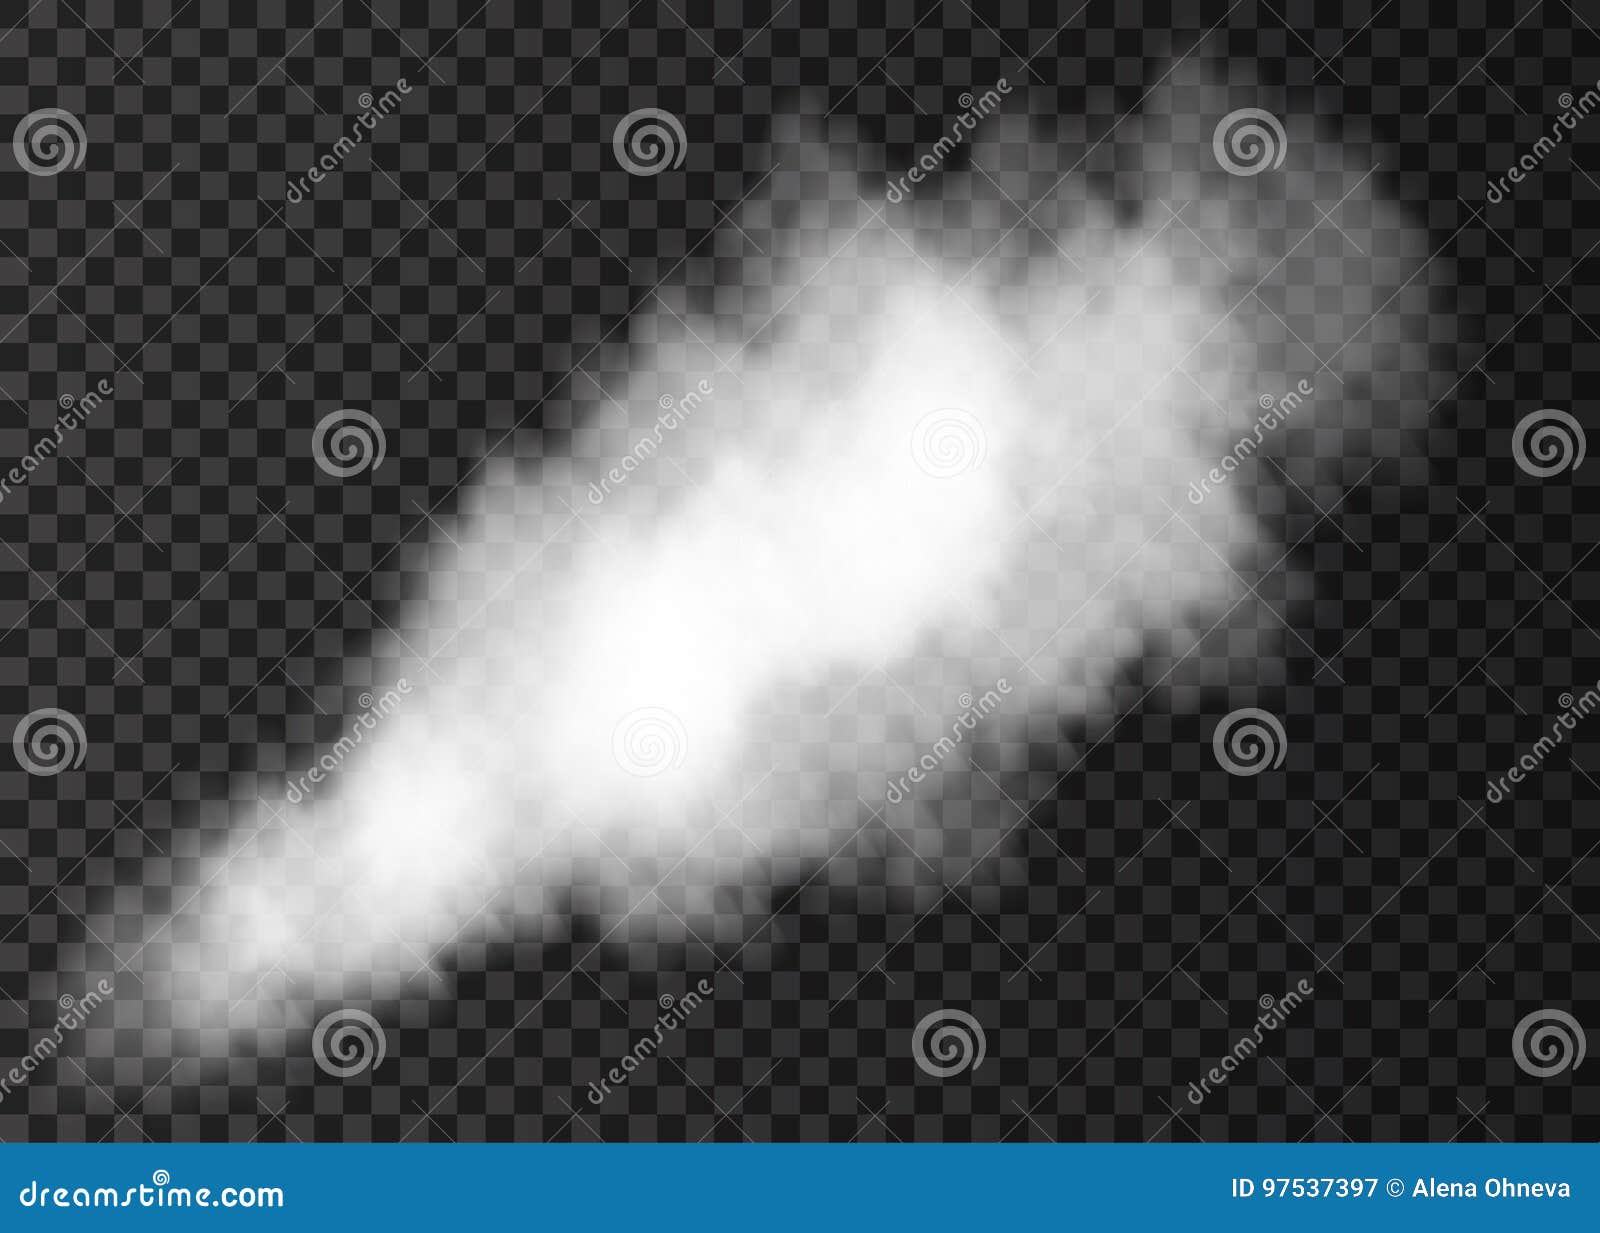 white smoke puff on transparent background.